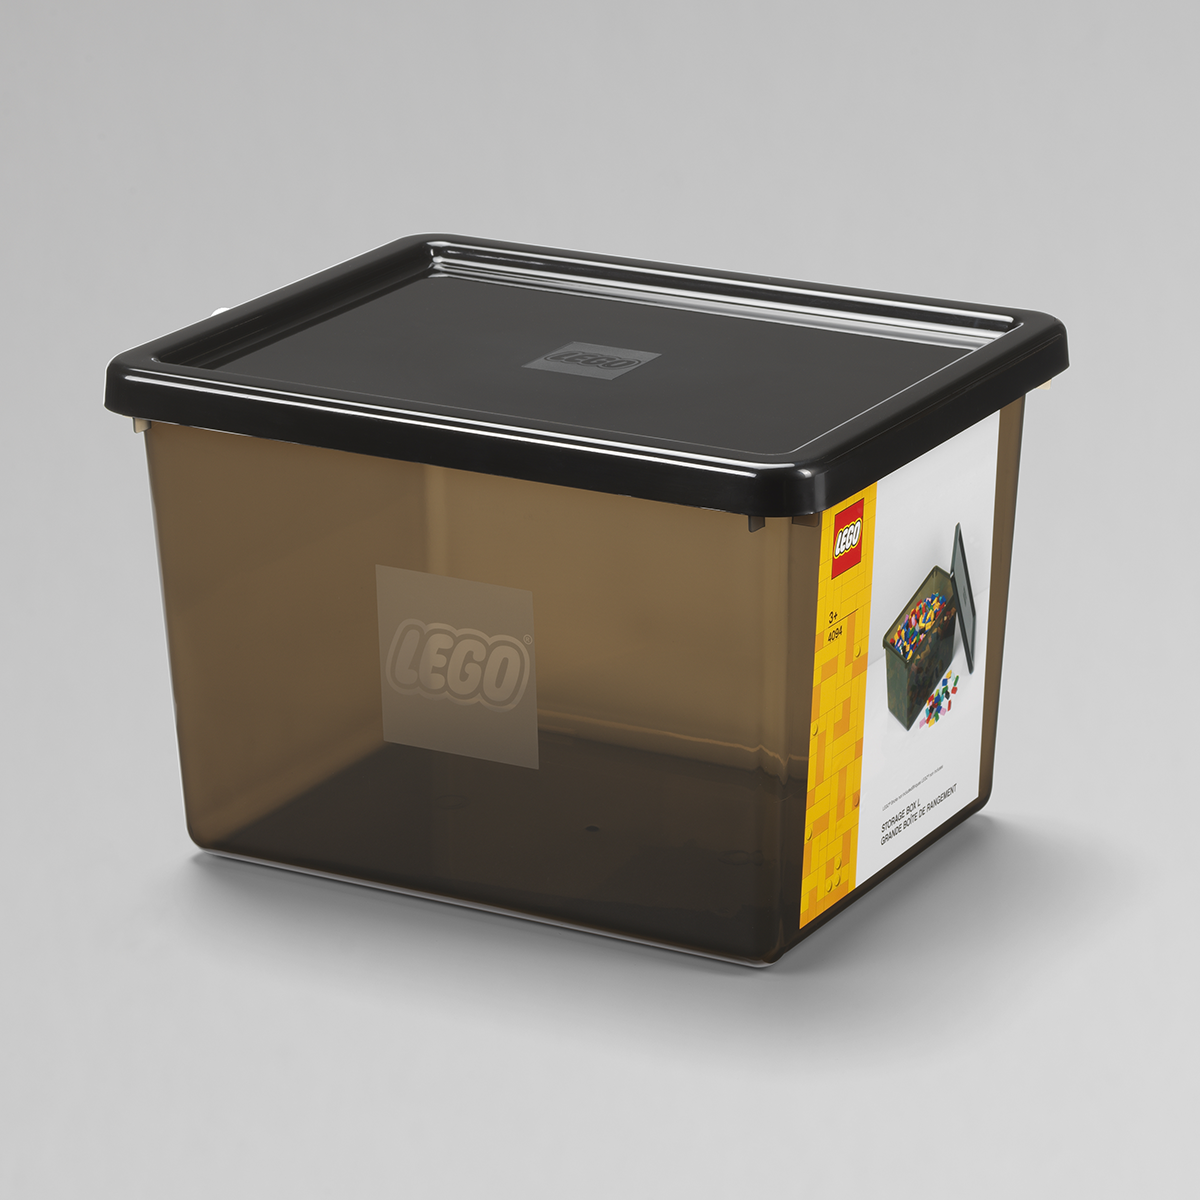 New LEGO Storage Box Coming from Room Copenhagen - The Brick Fan